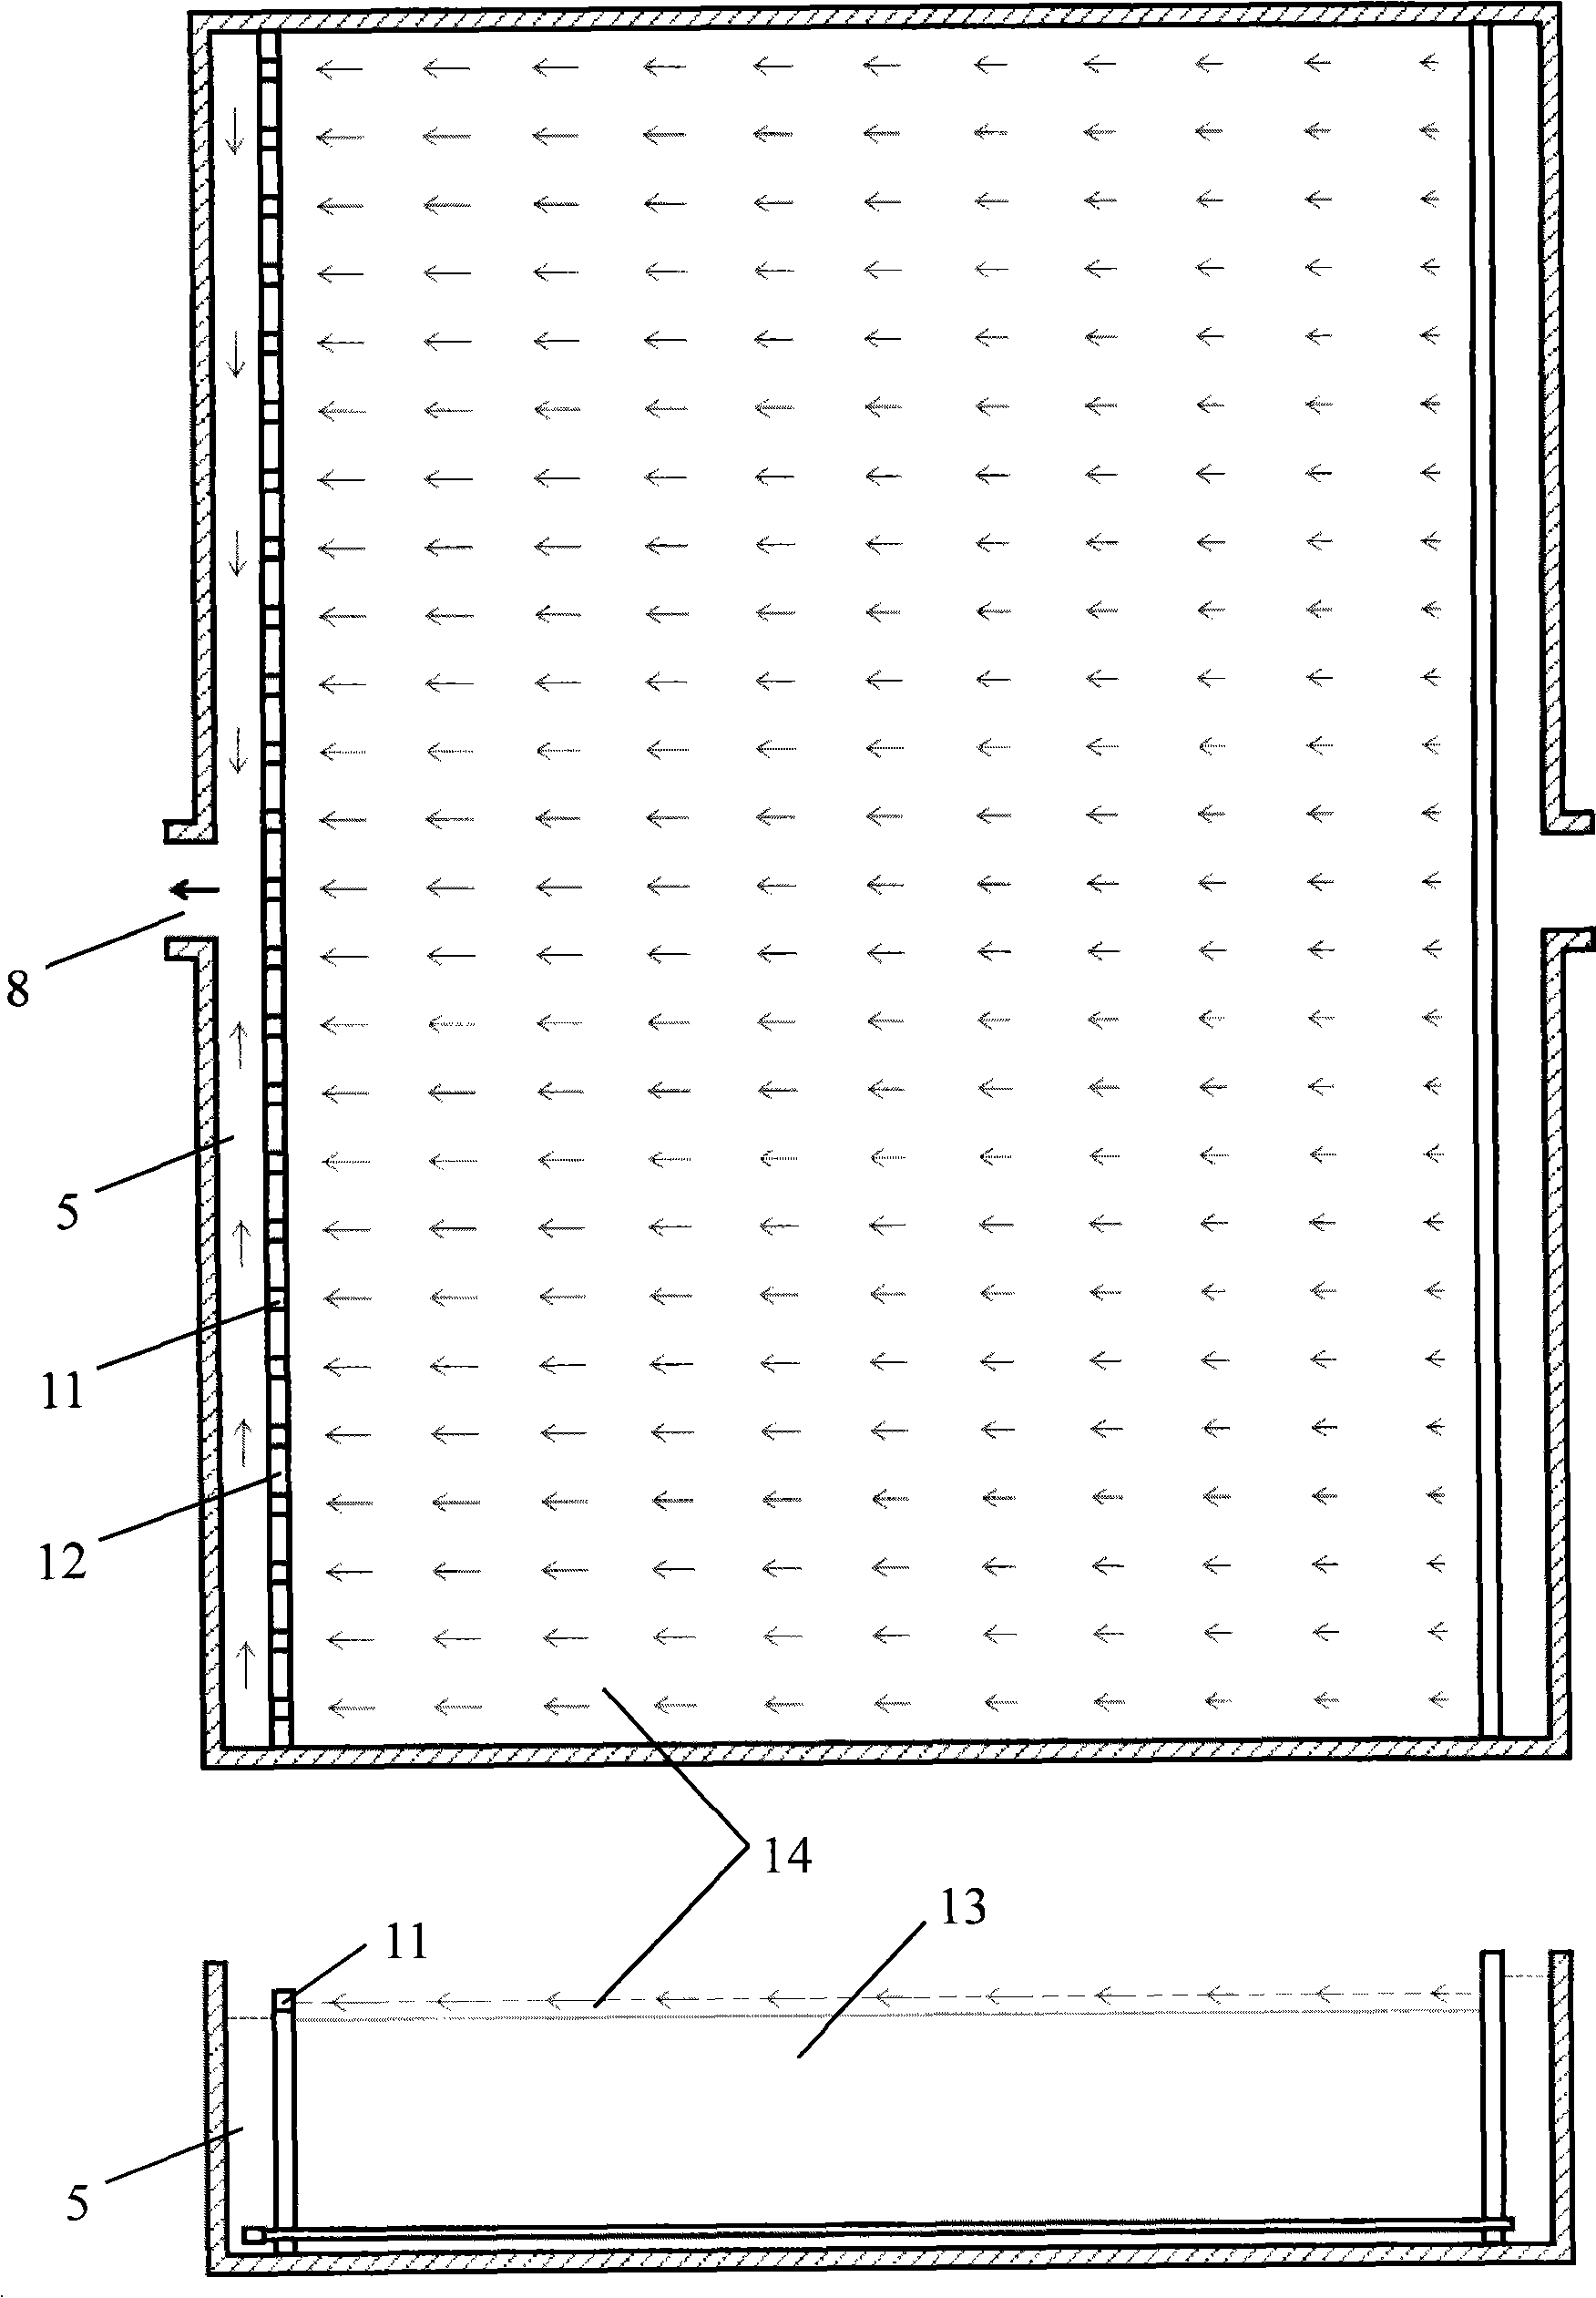 Low-resistance anti-block vertical flow wetland structure